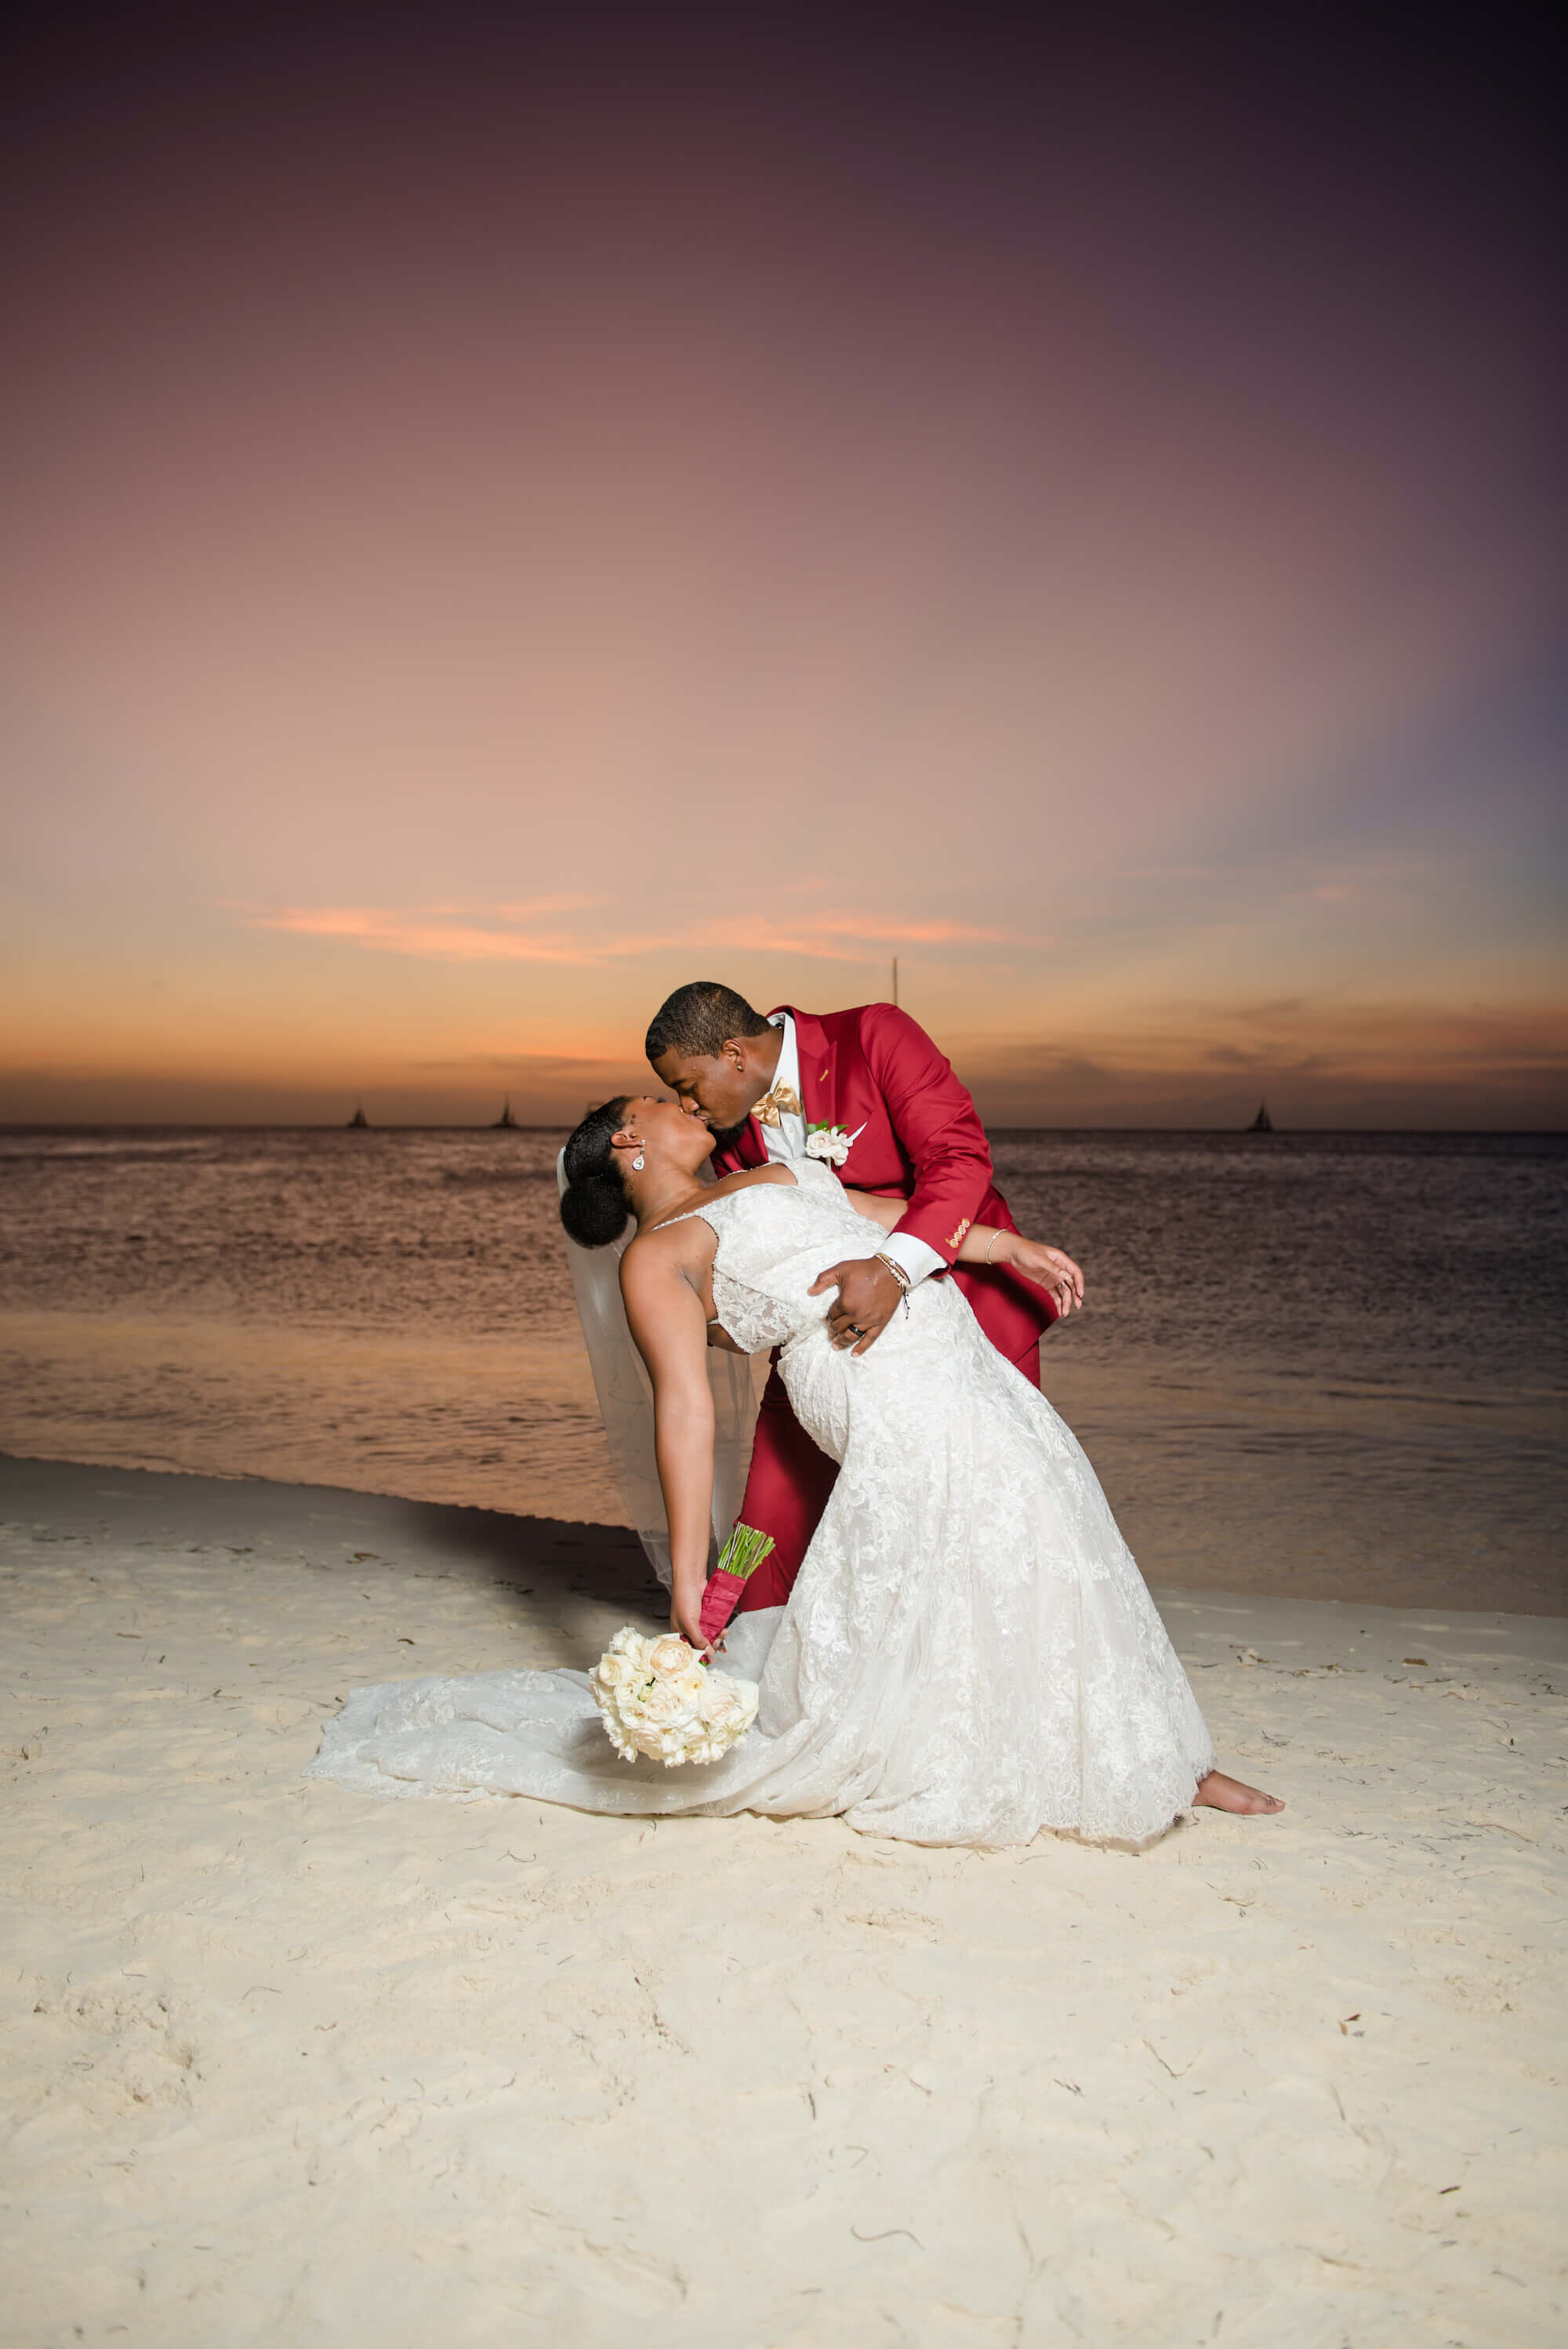 laura-how-to-plan-a-destination-wedding-in-oranjestad-aruba-hilton-aruba-resort-black-destination-bride-desti-tv-desti-guide-to-destination-weddings-2020-beach-couple.jpg